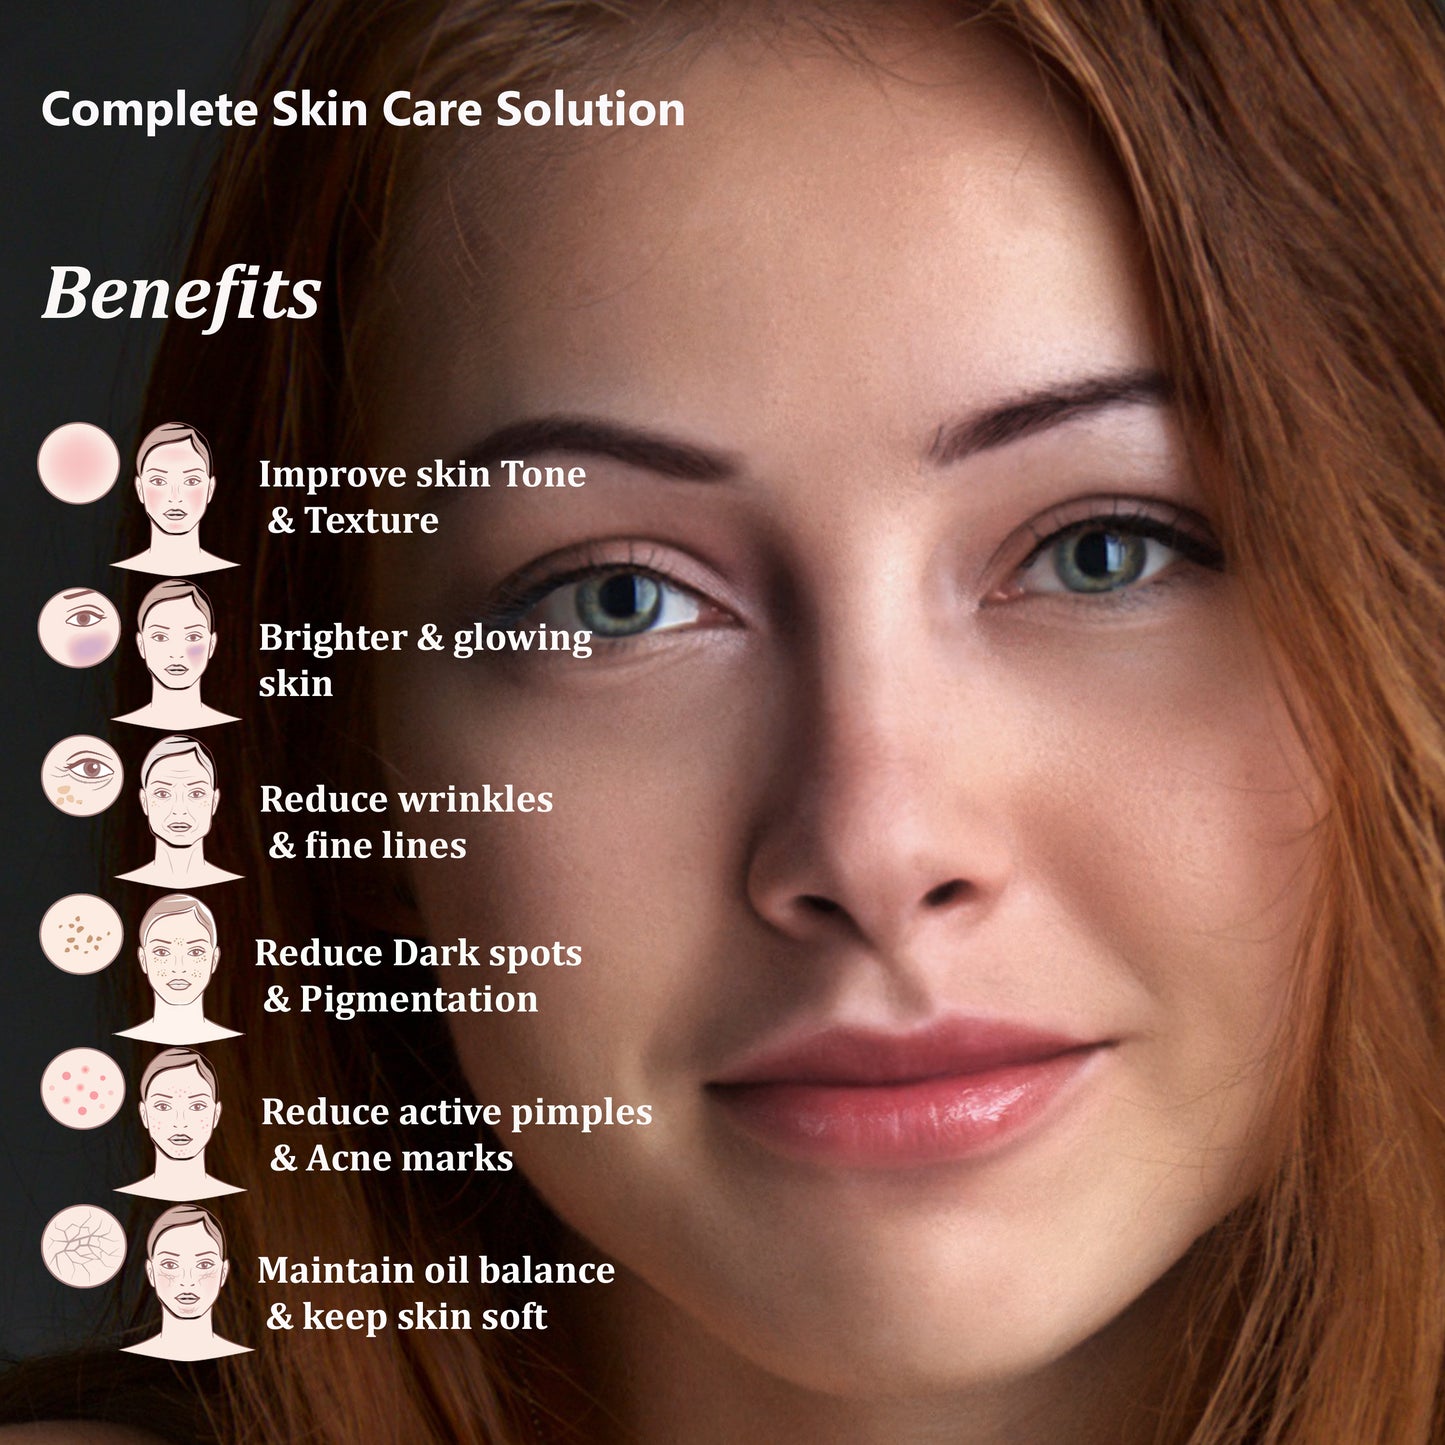 ClearCut Face serum Vitamin C Niacinamide Retinol Alpha Arbutin Skin brightening whitening